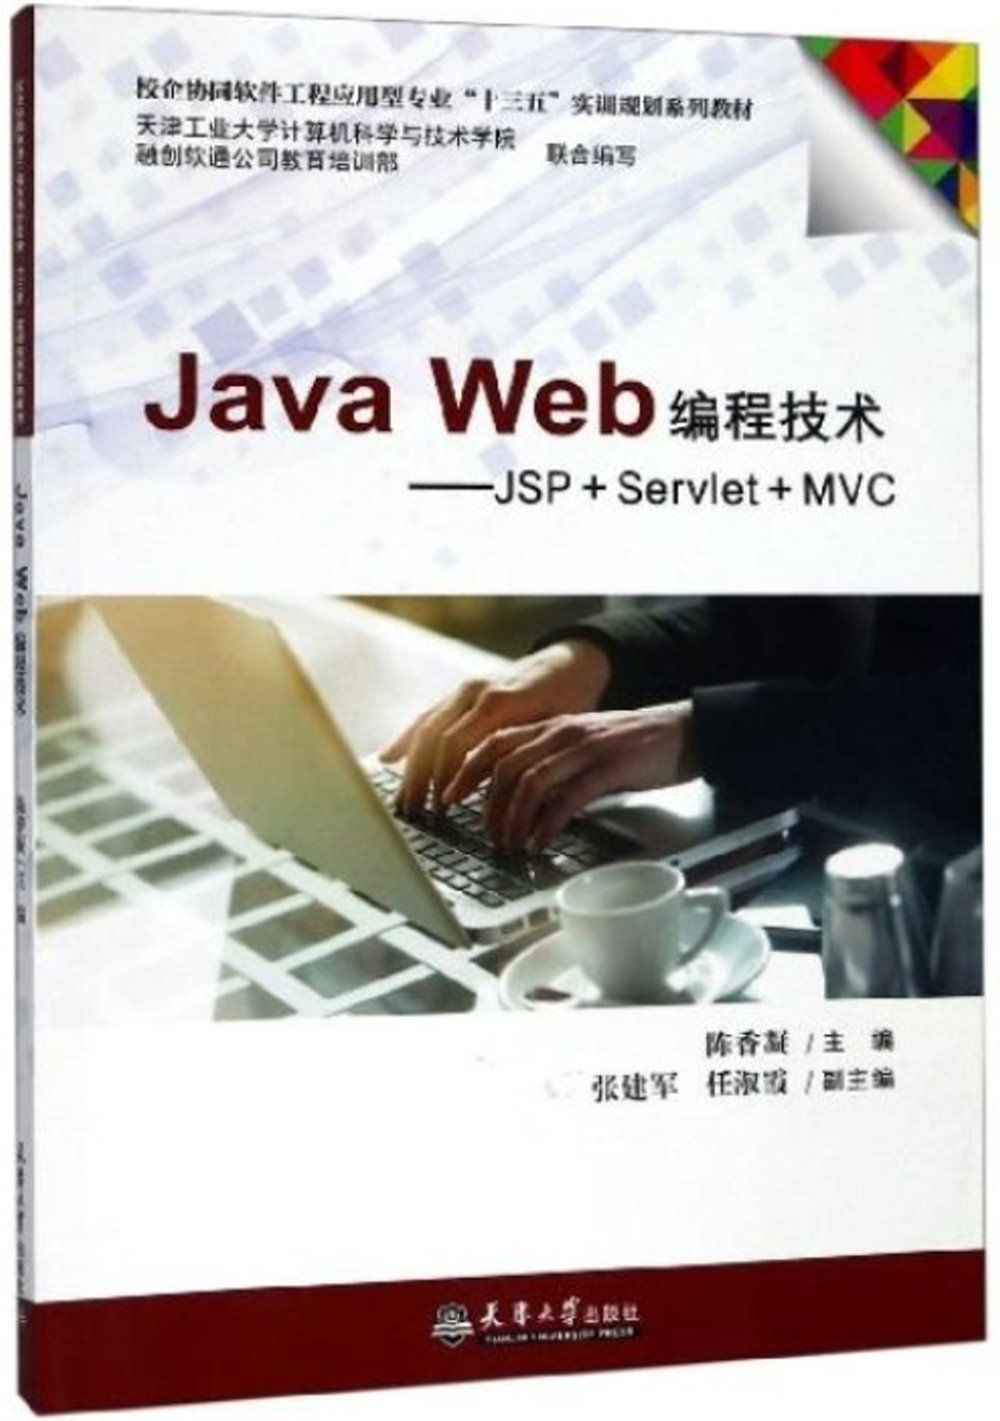 Java Web編程技術--JSP+Servlet+MVC